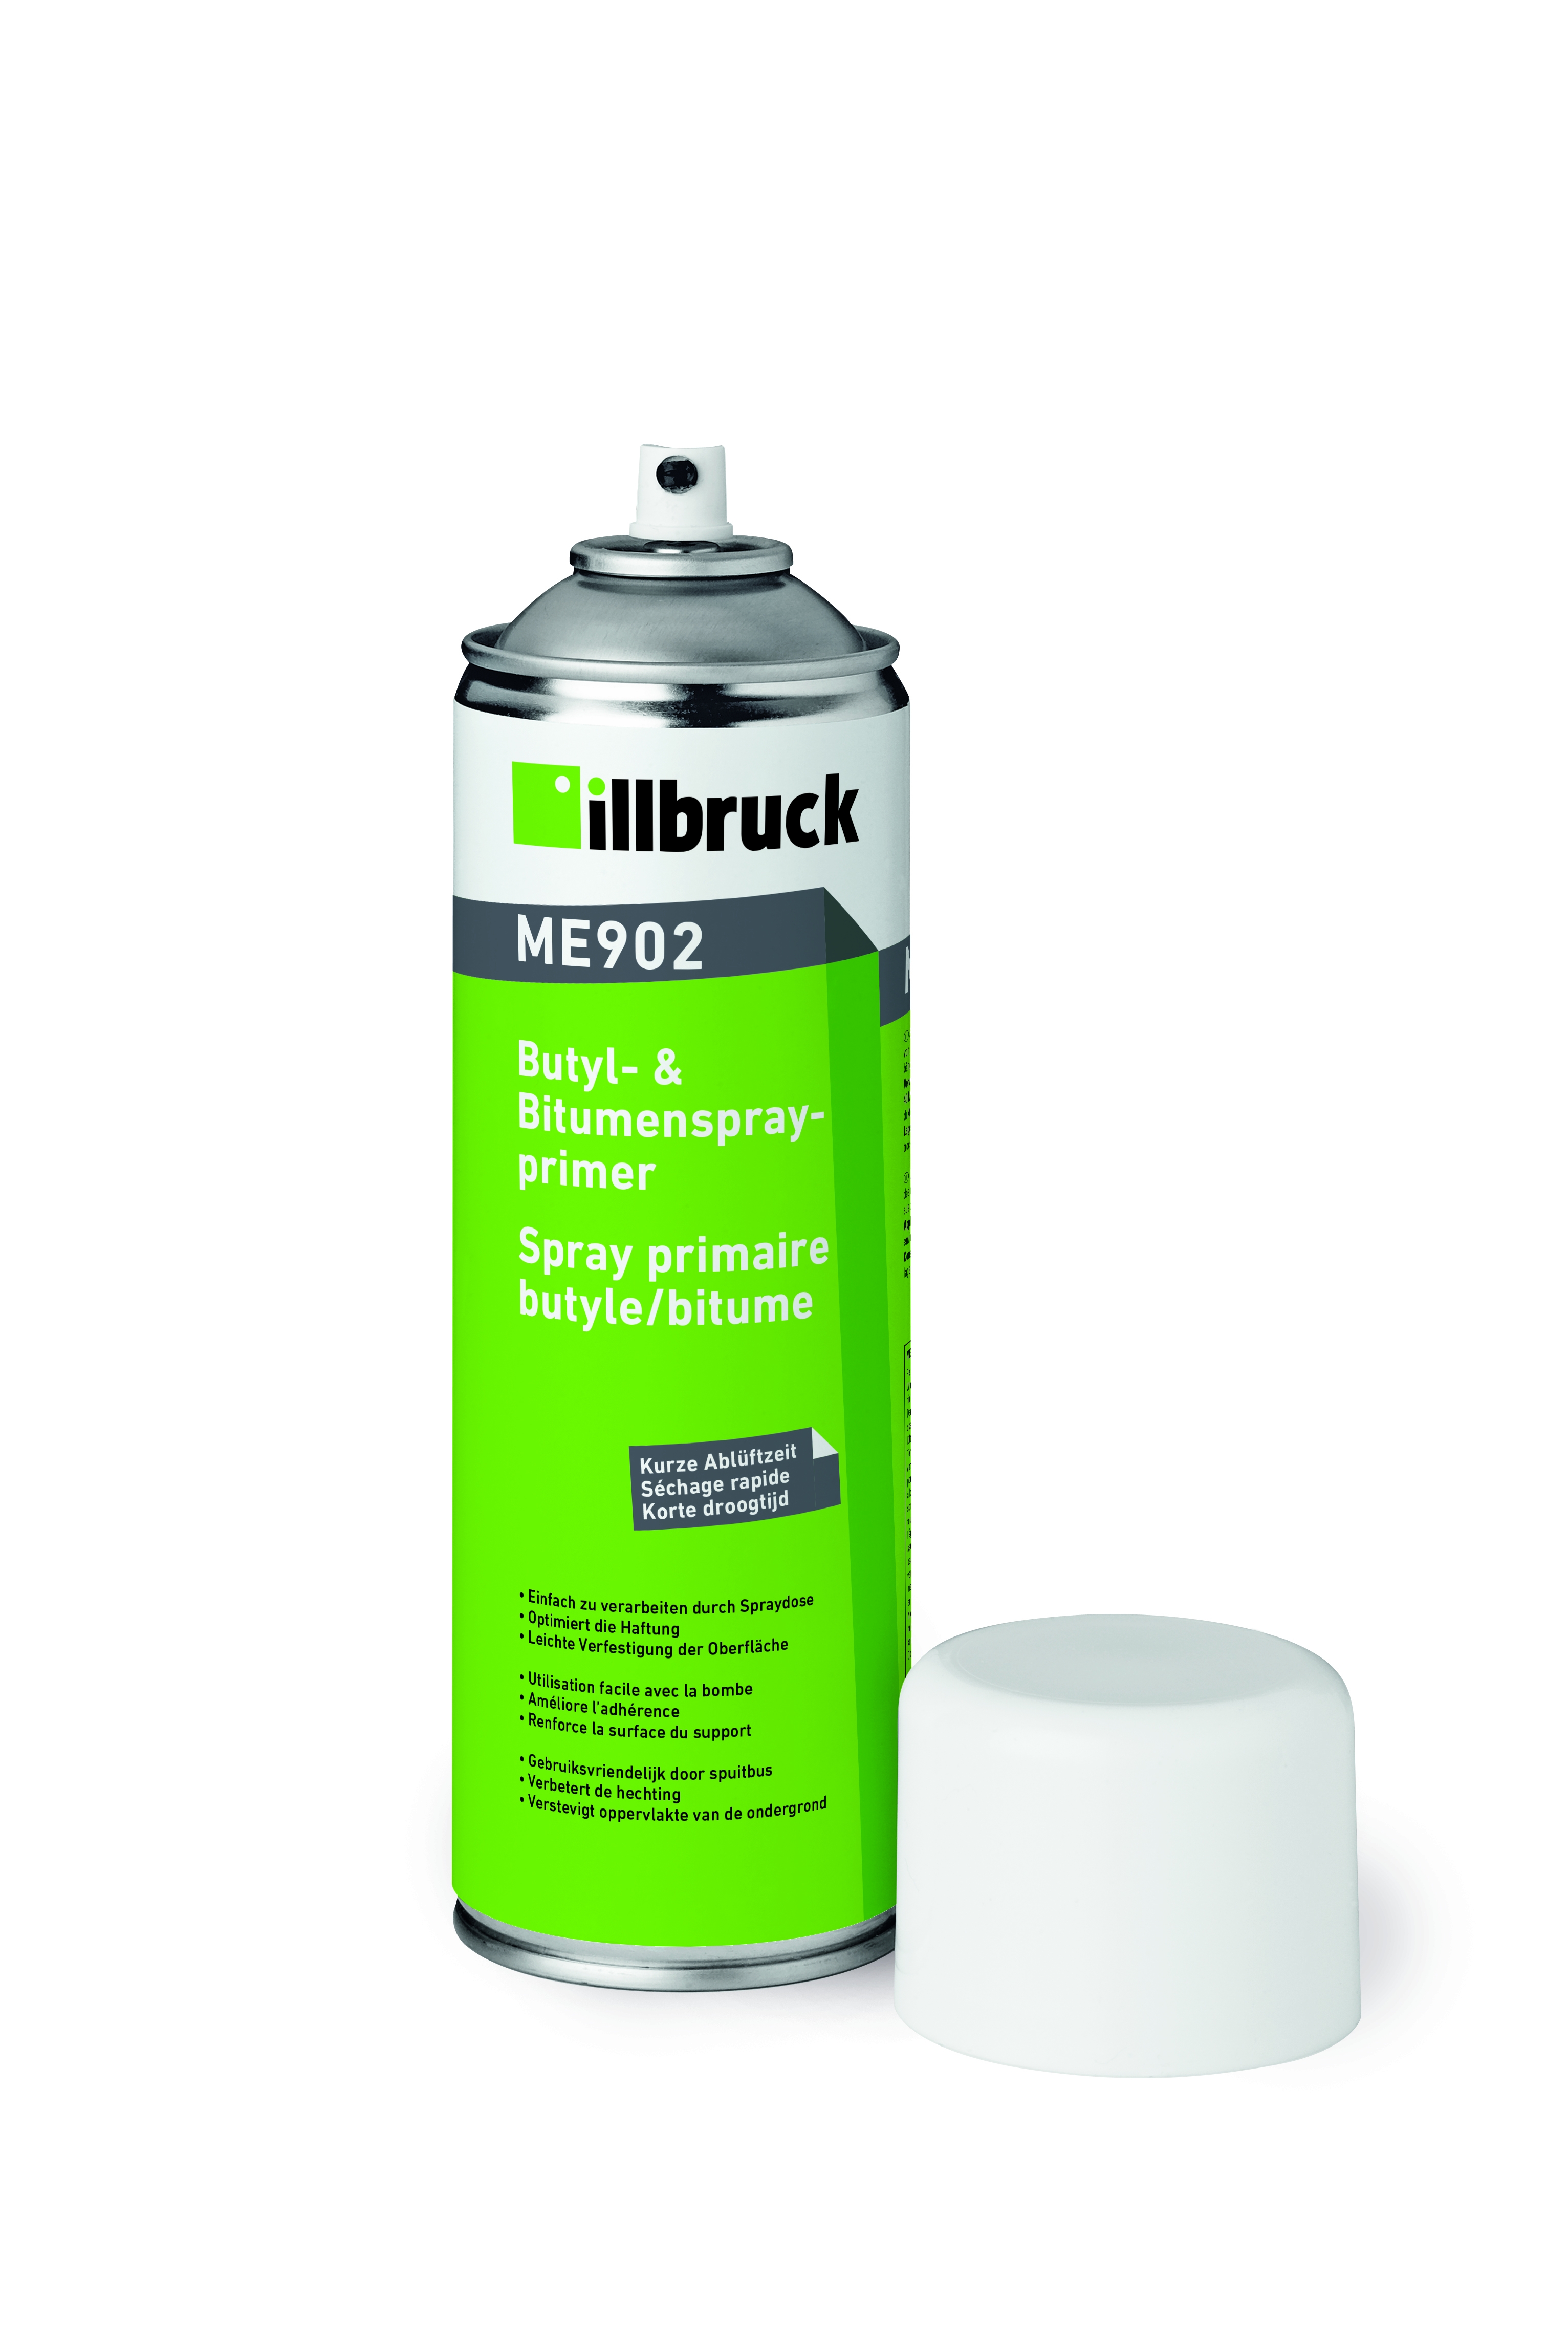 illbruck ME902 Butyl/Bitumenspray-primer 500 ml